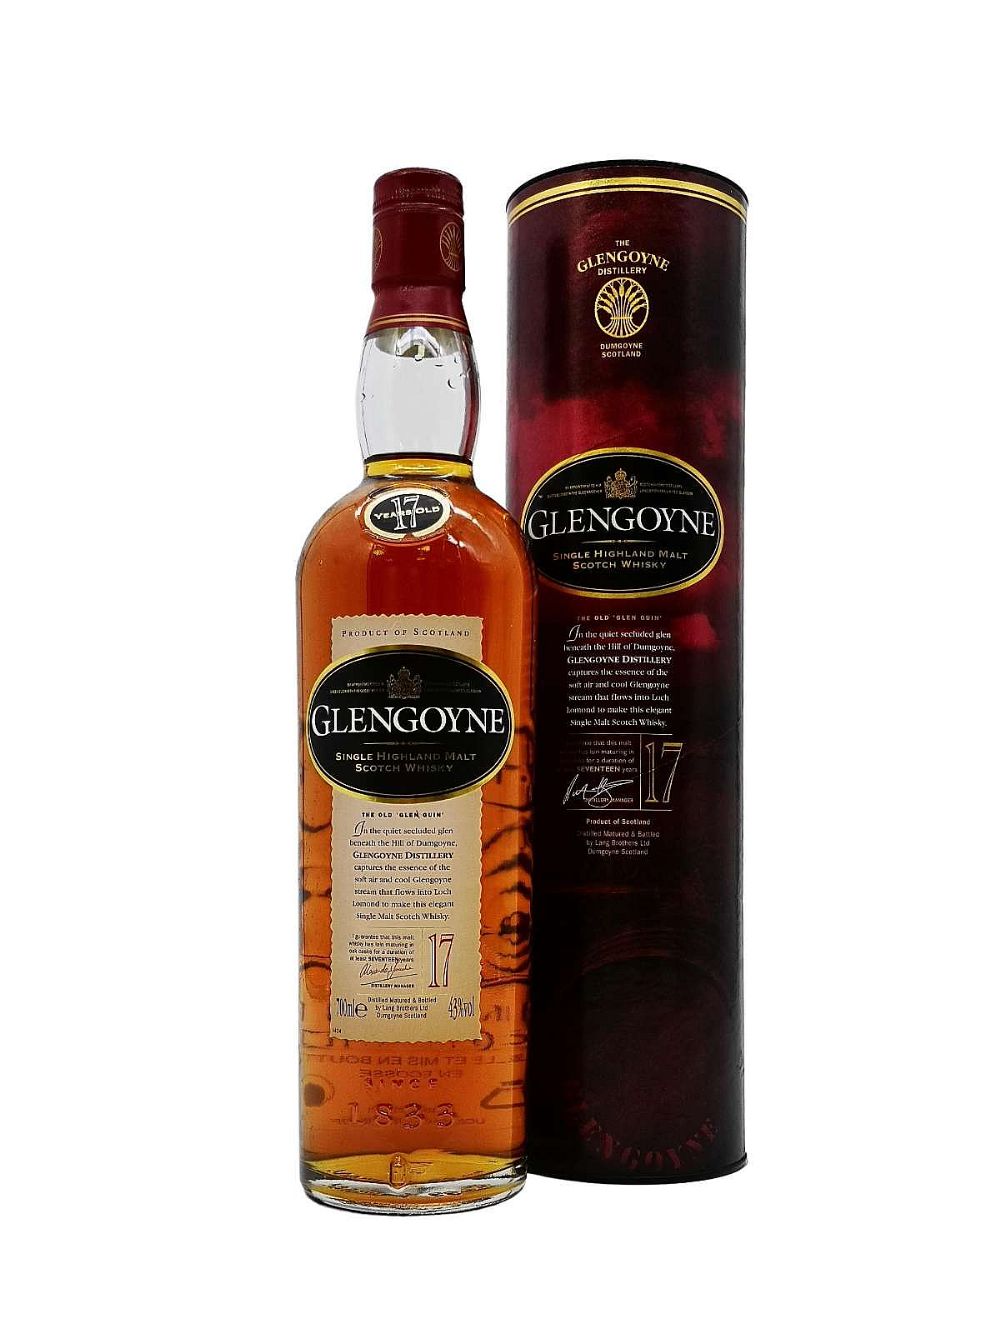 Glengoyne 17 year old Single Malt Scotch Whisky